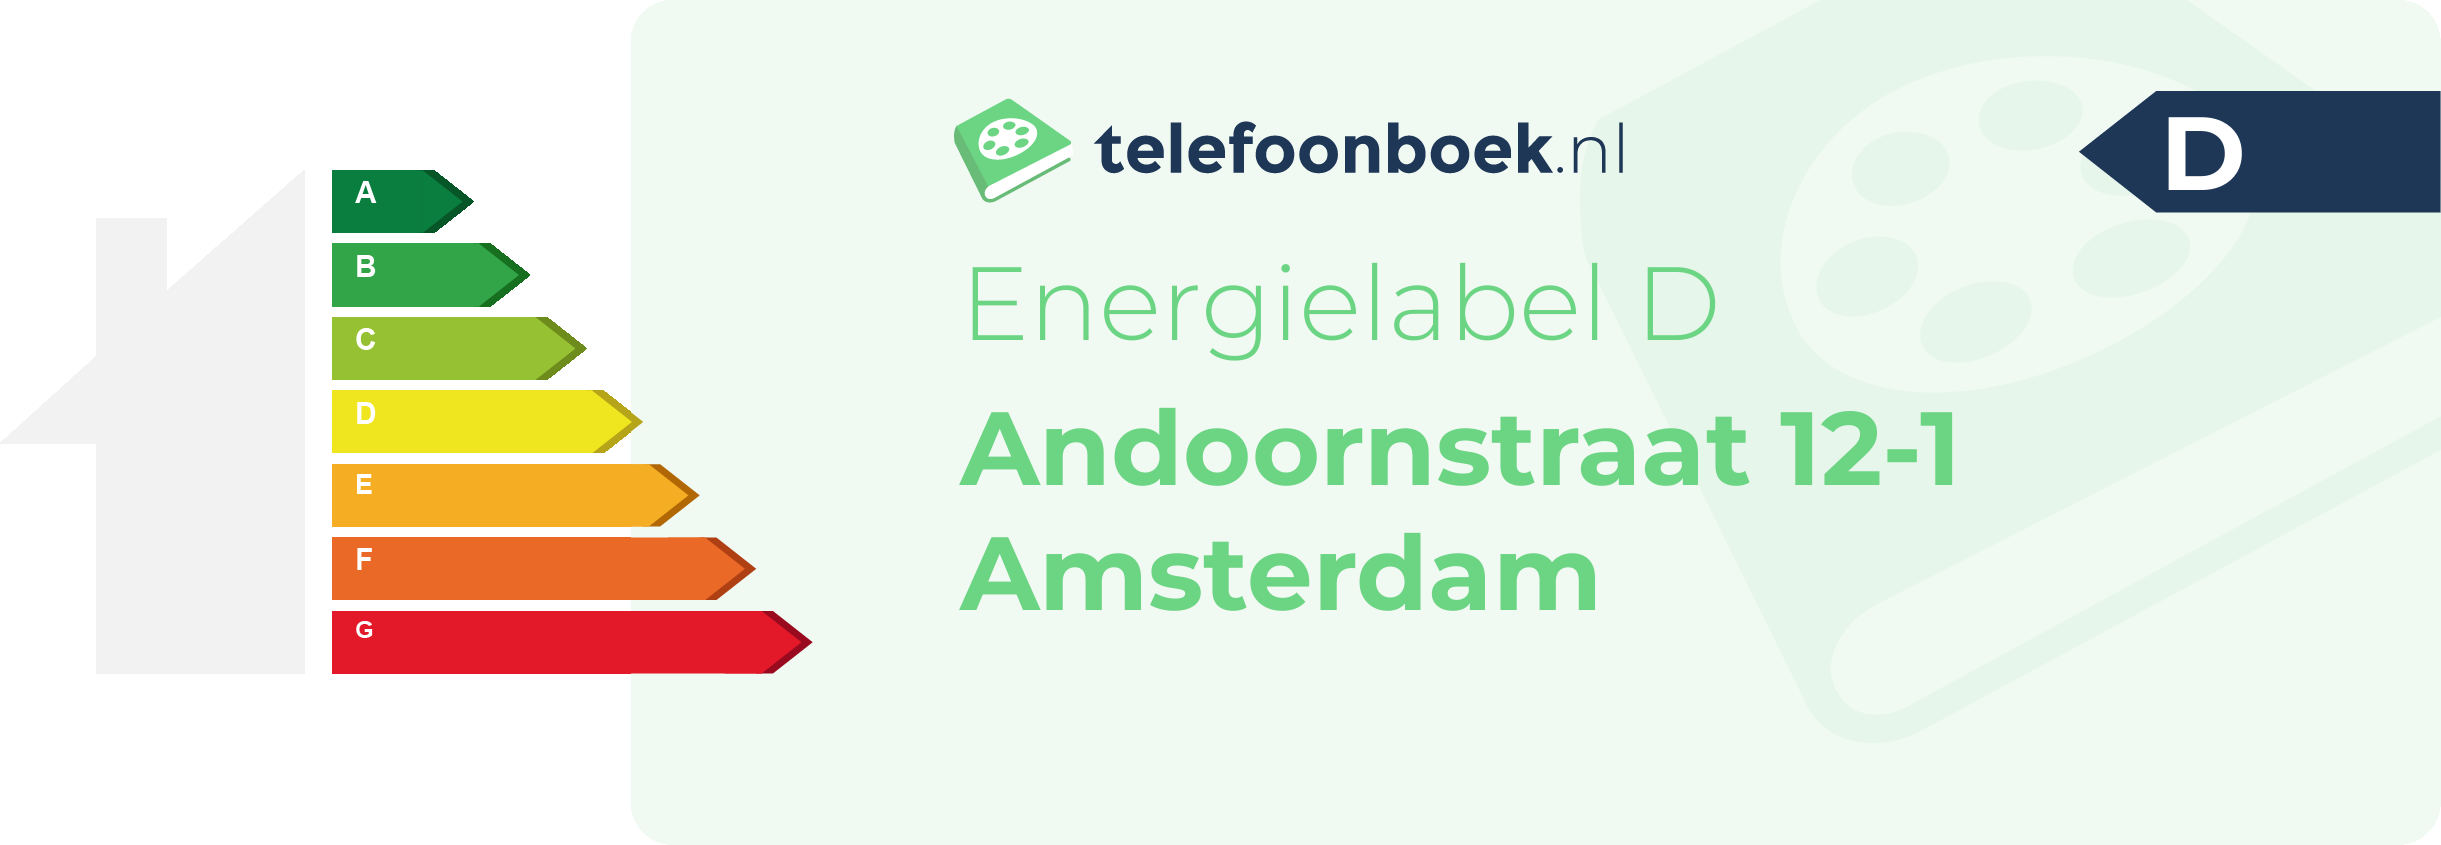 Energielabel Andoornstraat 12-1 Amsterdam